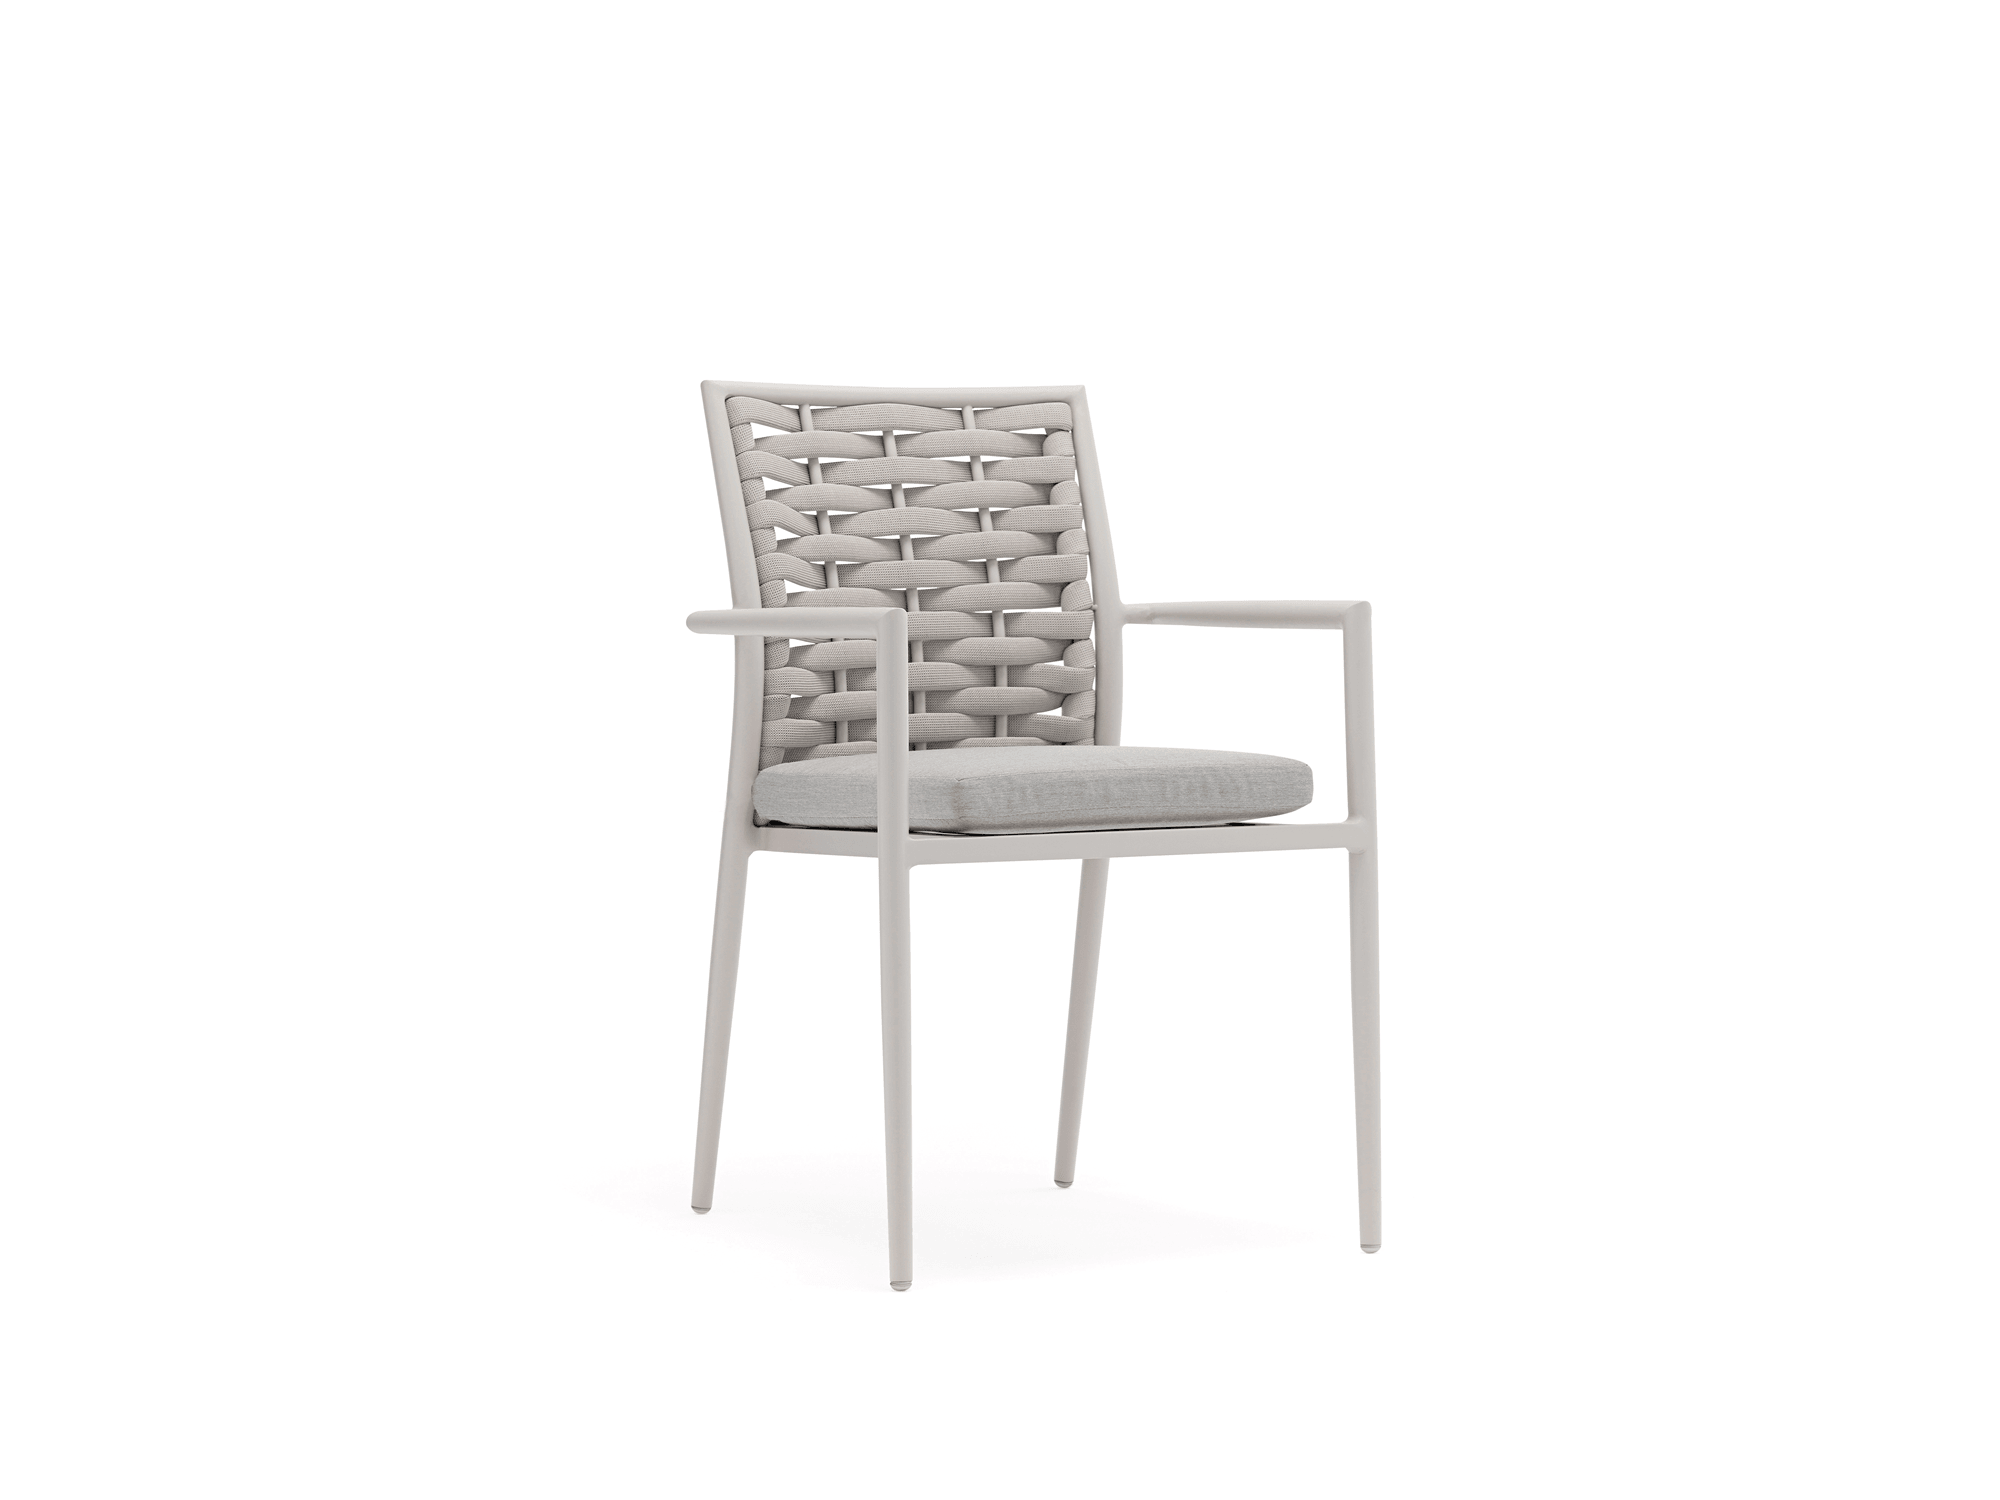 Nita Loop Dining Chair in Griege - Euro Living Furniture